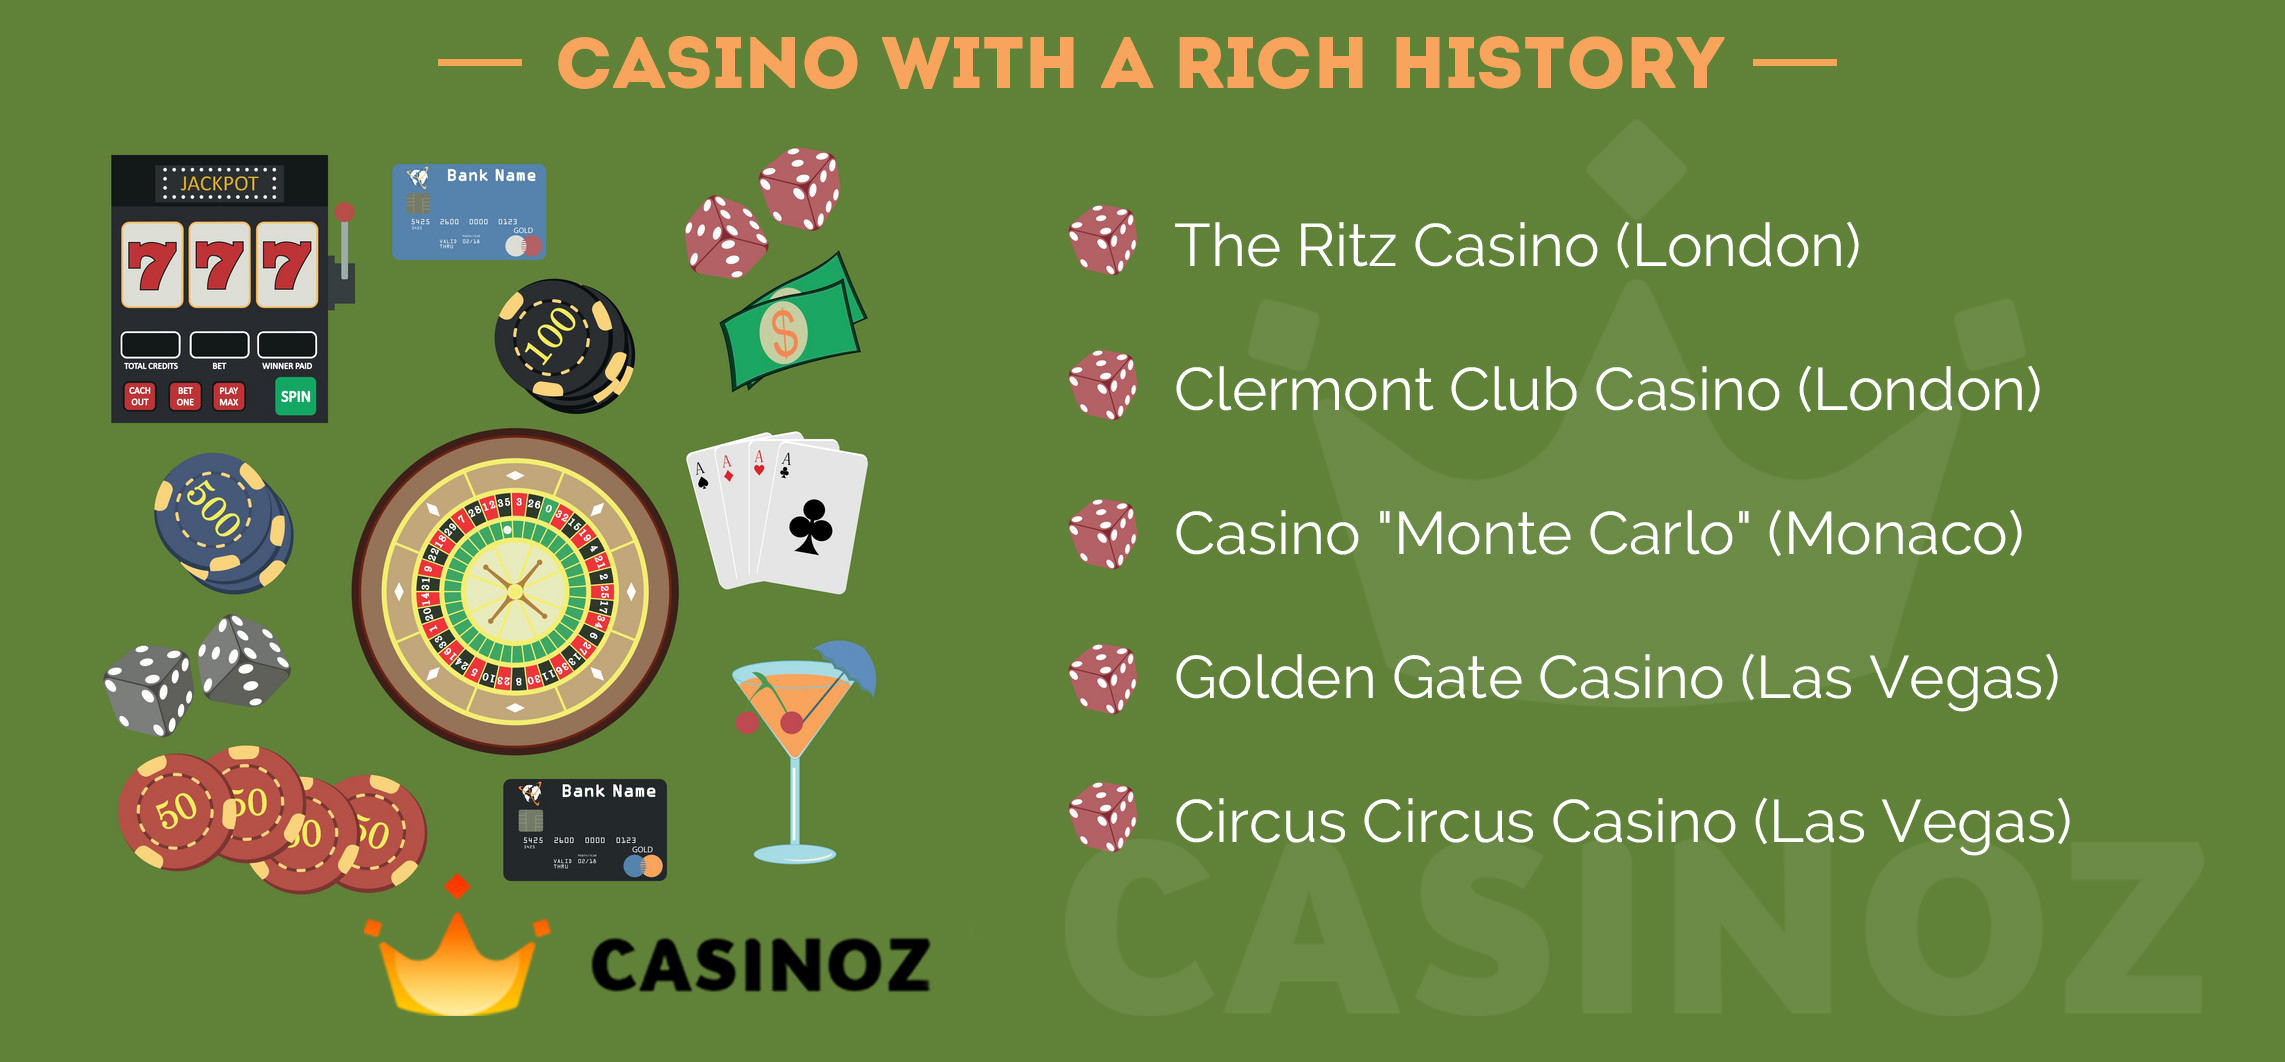 biggest casinos world companies